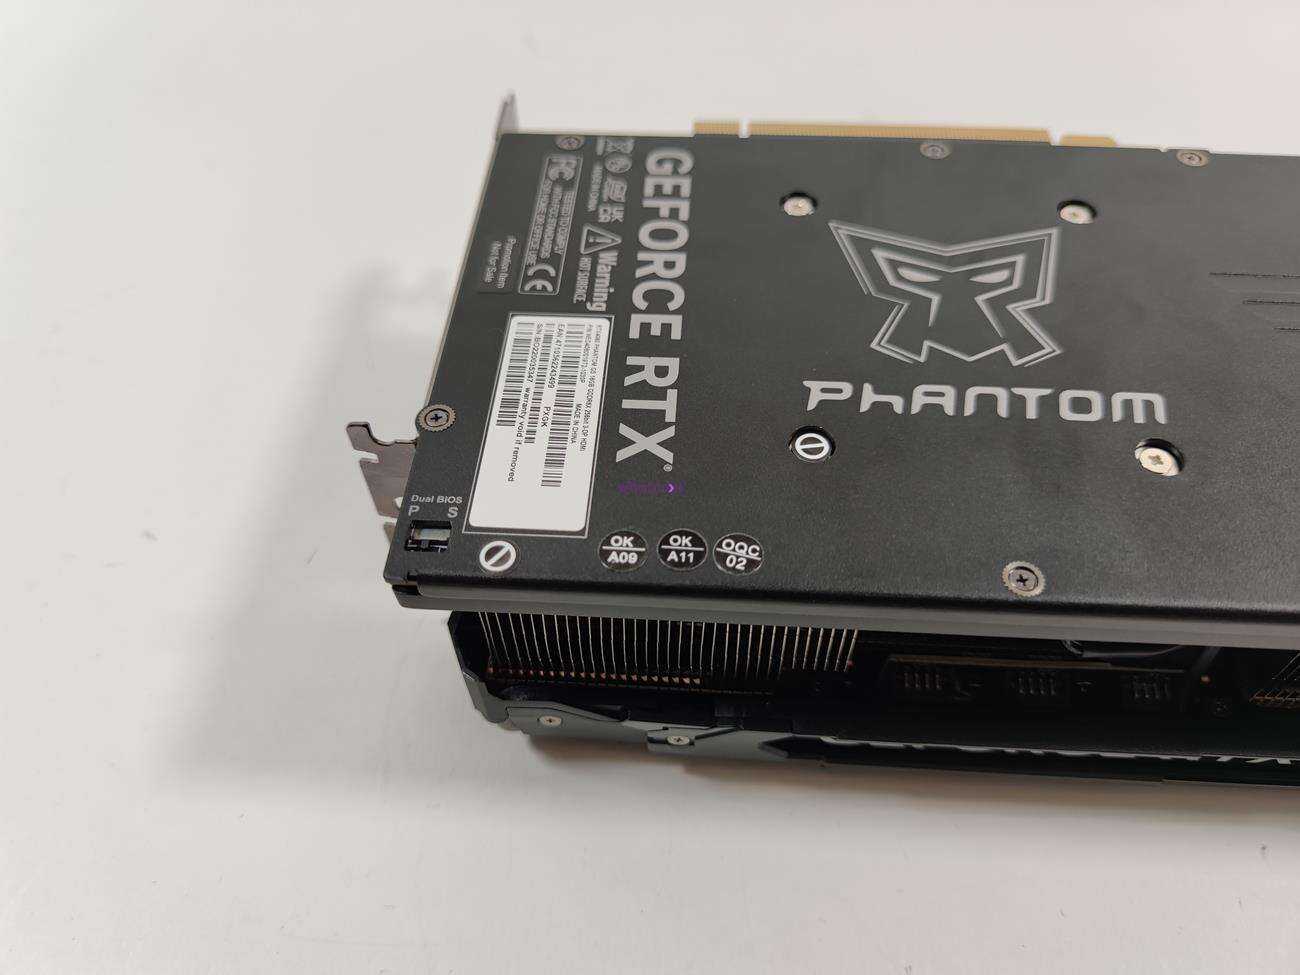 test Gainward GeForce RTX 4080 Phantom GS, recenzja Gainward GeForce RTX 4080 Phantom GS, opinia Gainward GeForce RTX 4080 Phantom GS